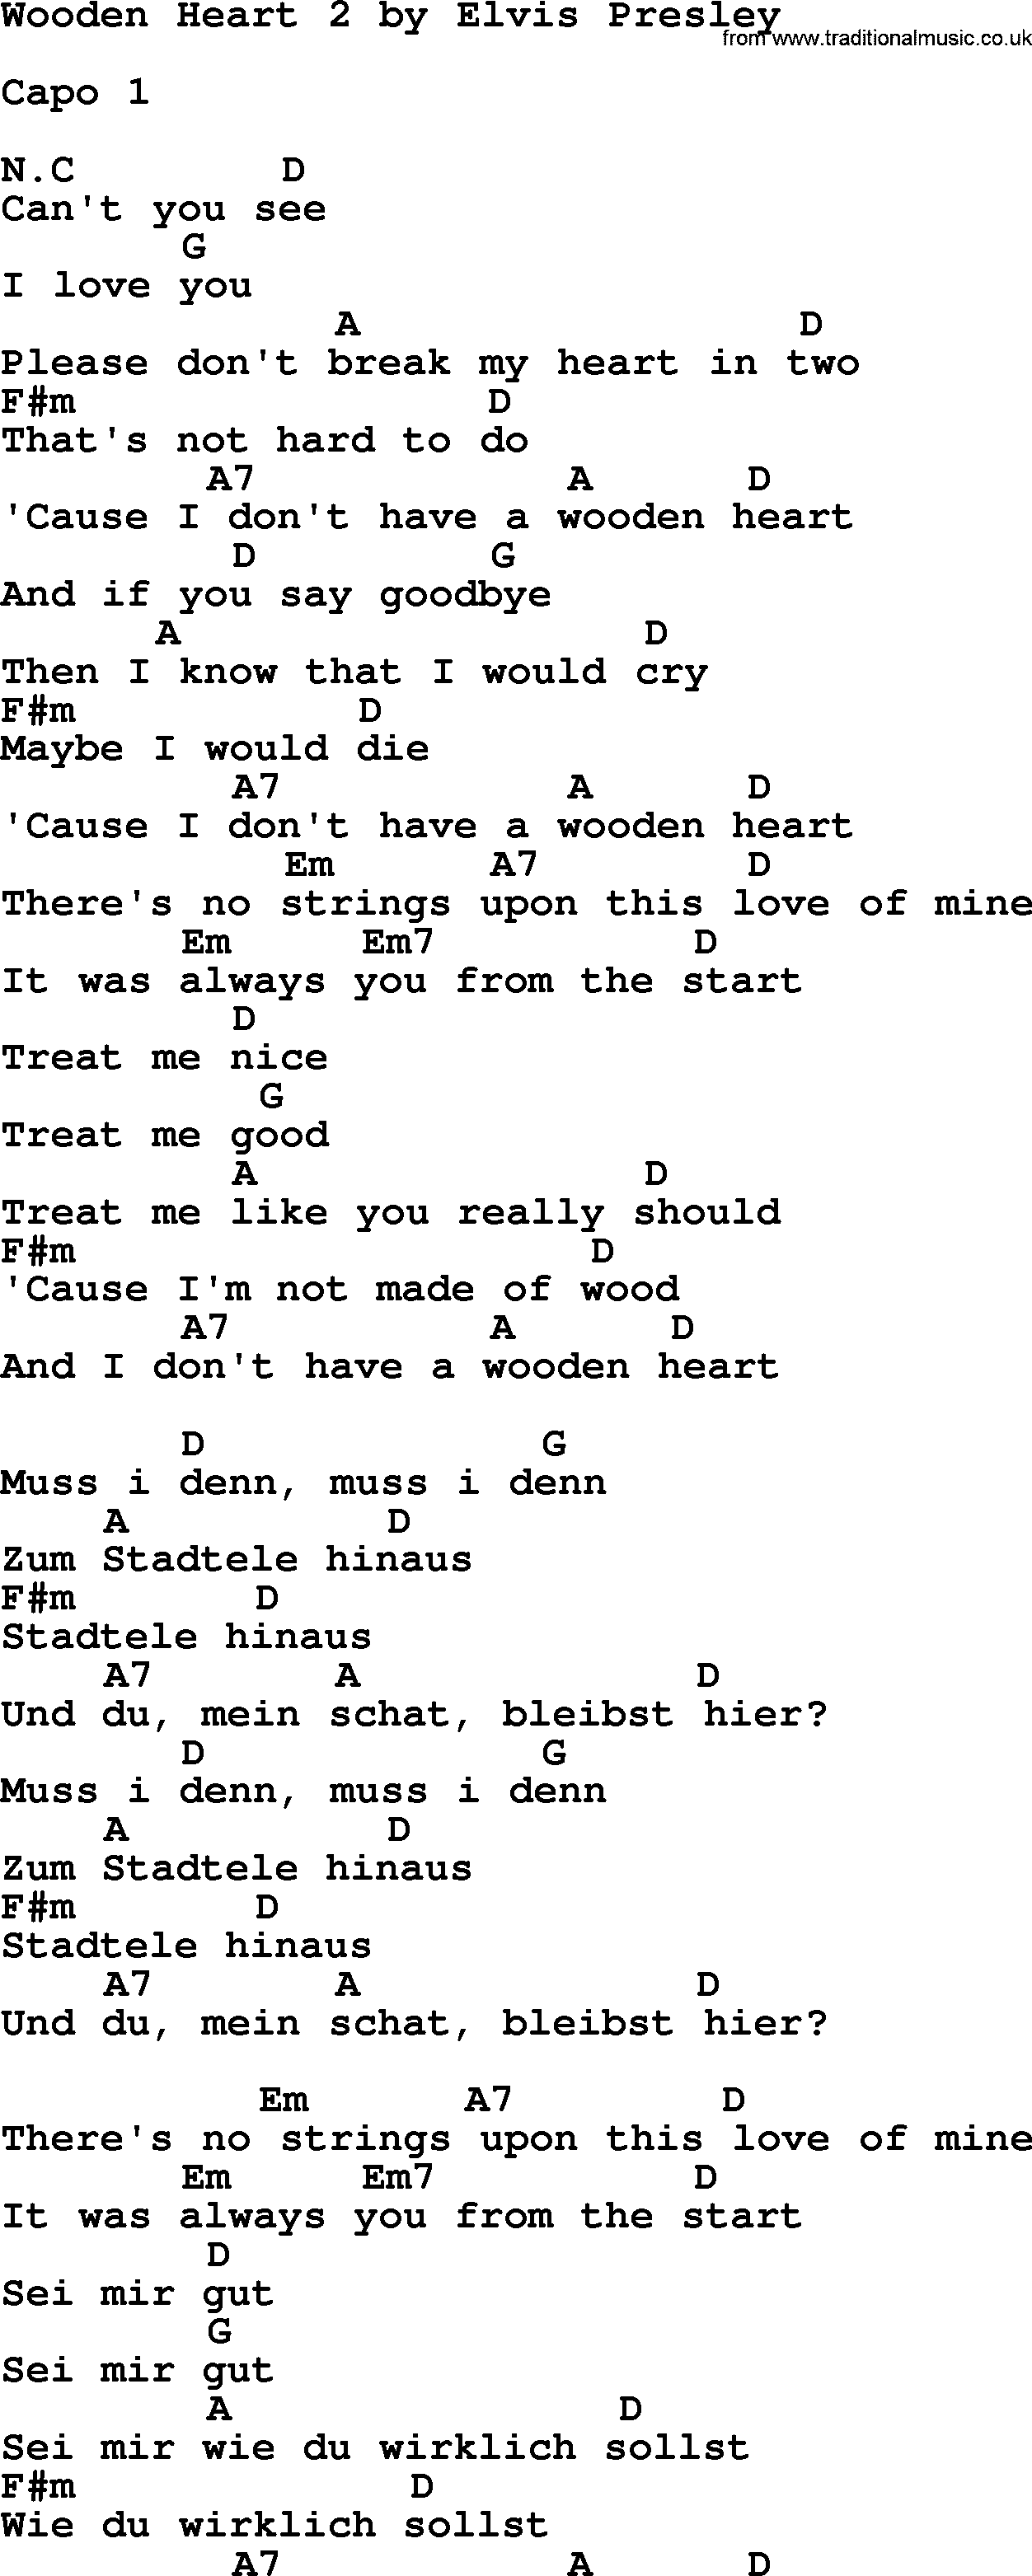 Elvis Presley song: Wooden Heart 2, lyrics and chords